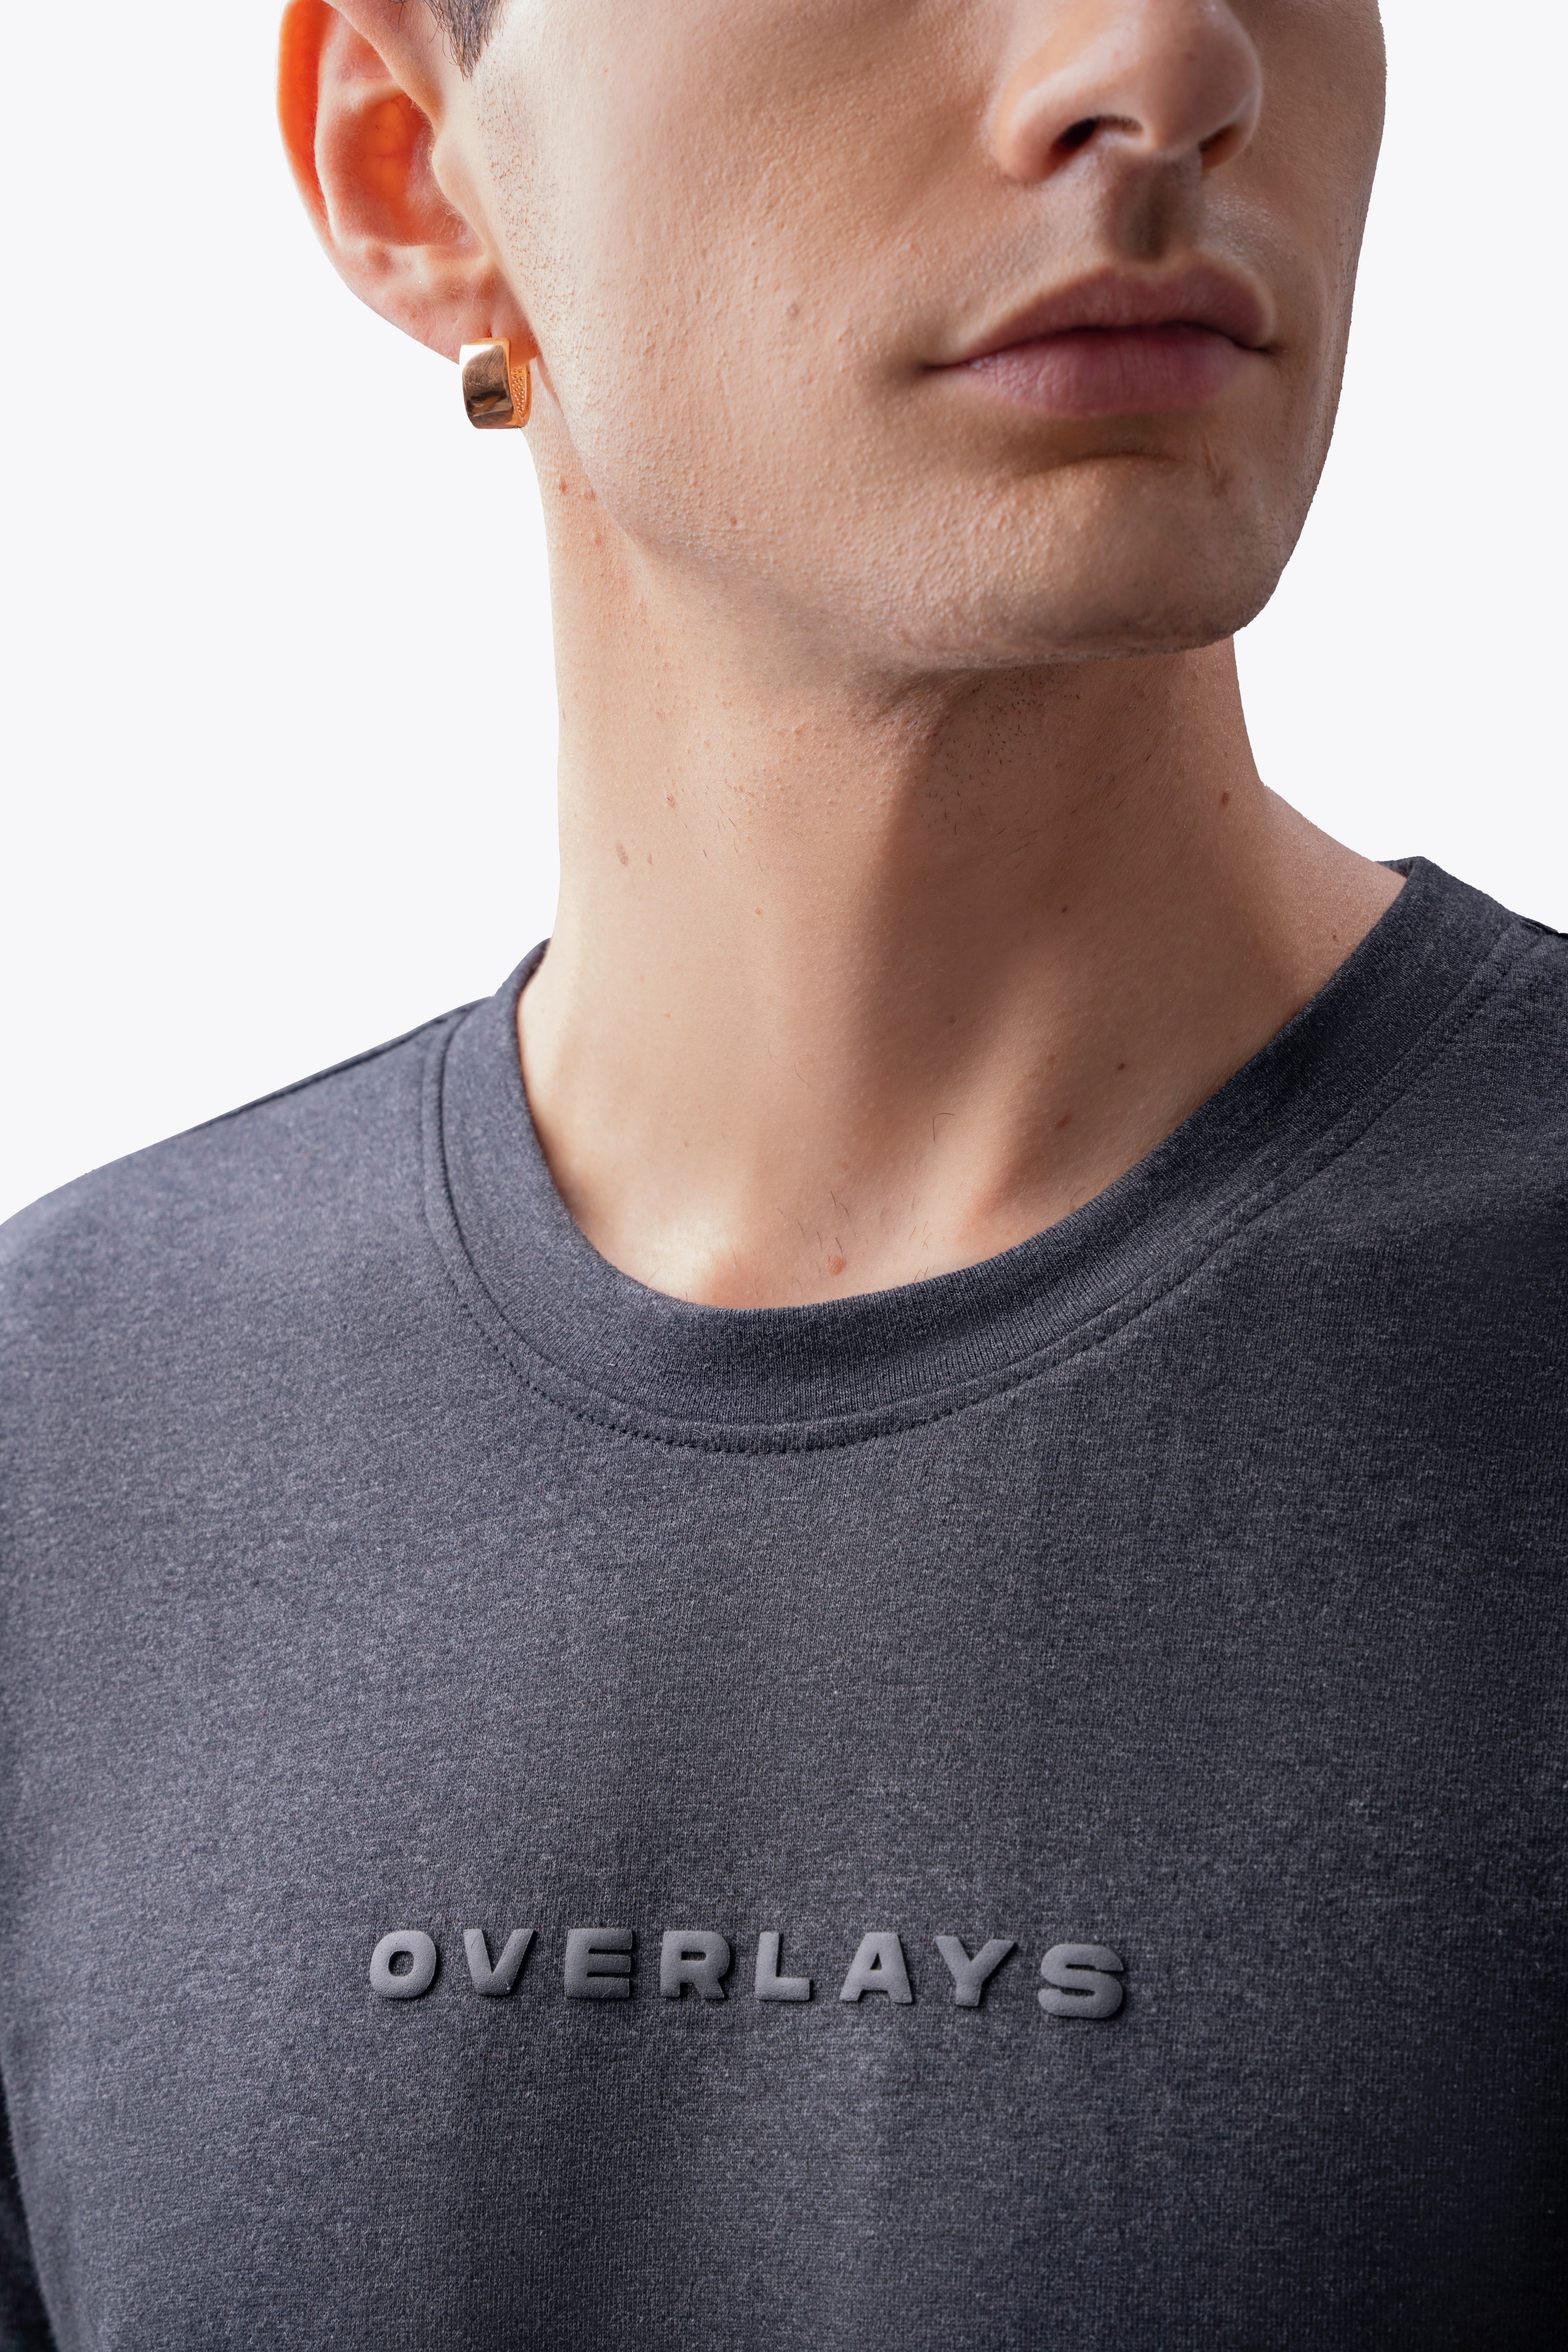 Charcoal Grey Regular Fit T-shirt